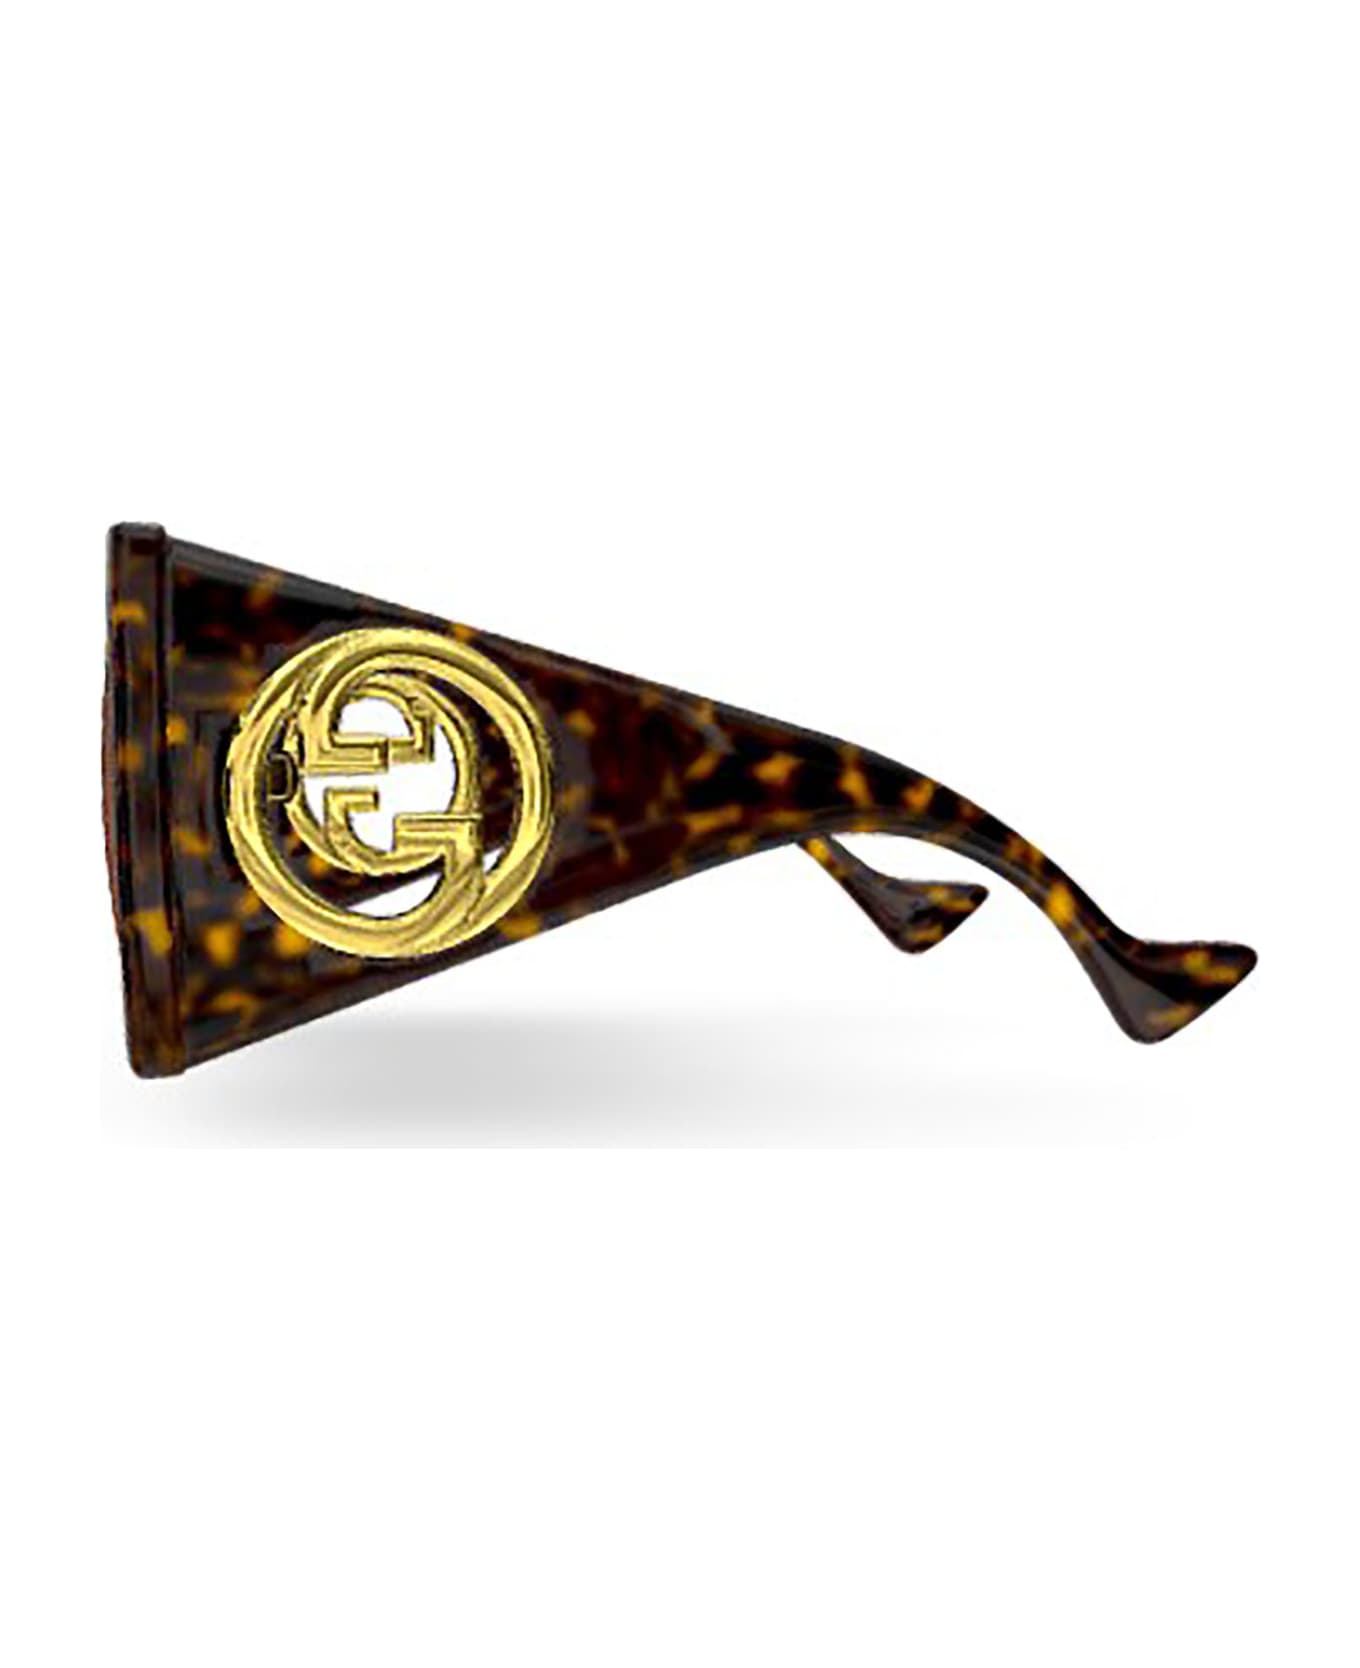 Gucci Eyewear Gg1254s Sunglasses - HAVANA-HAVANA-BROWN サングラス